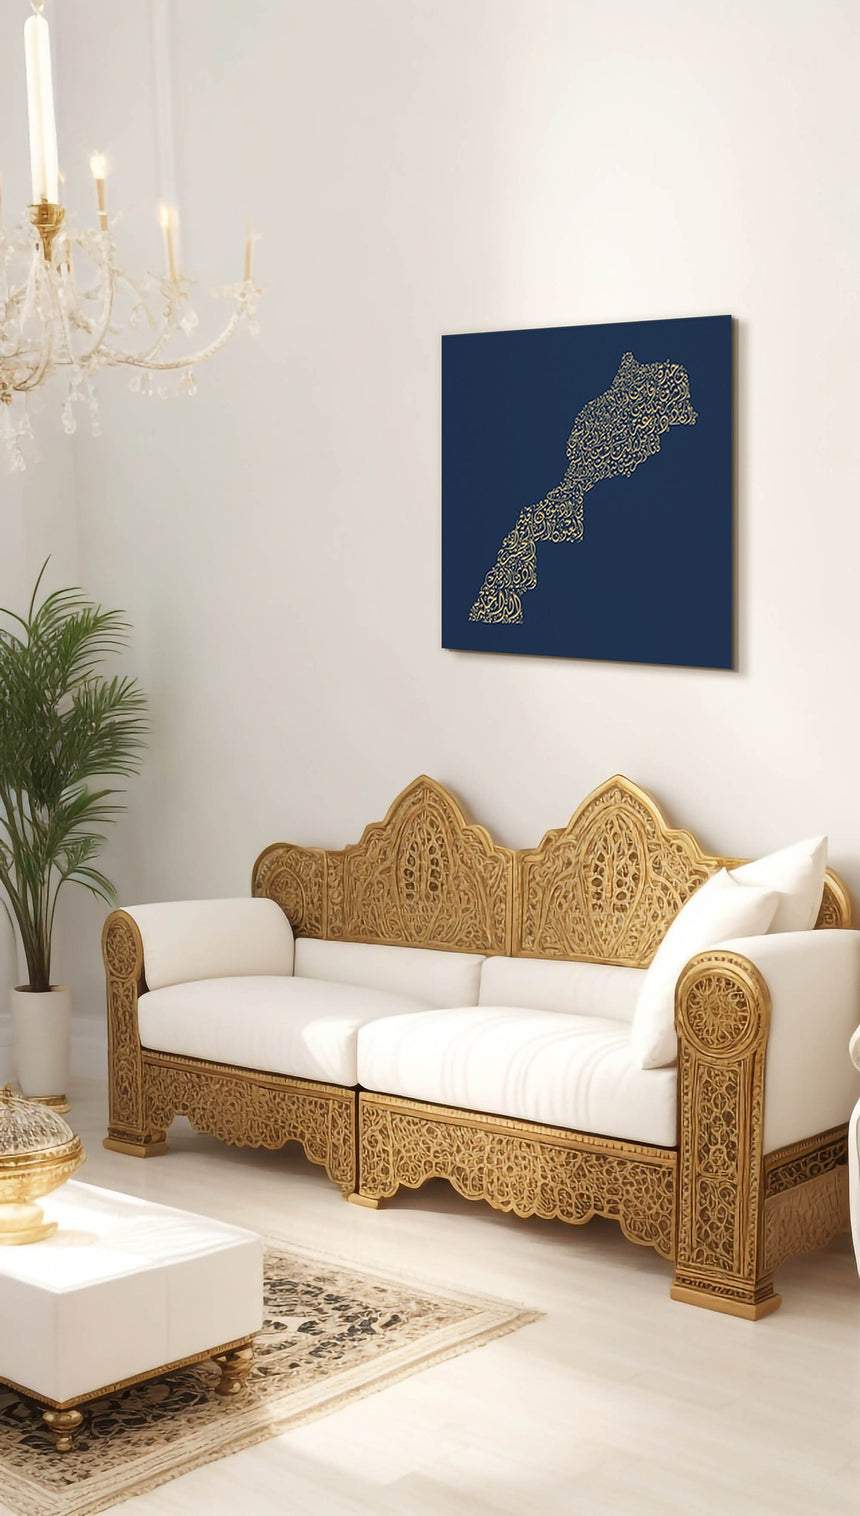 Morocco Map: Blue background, gold carve